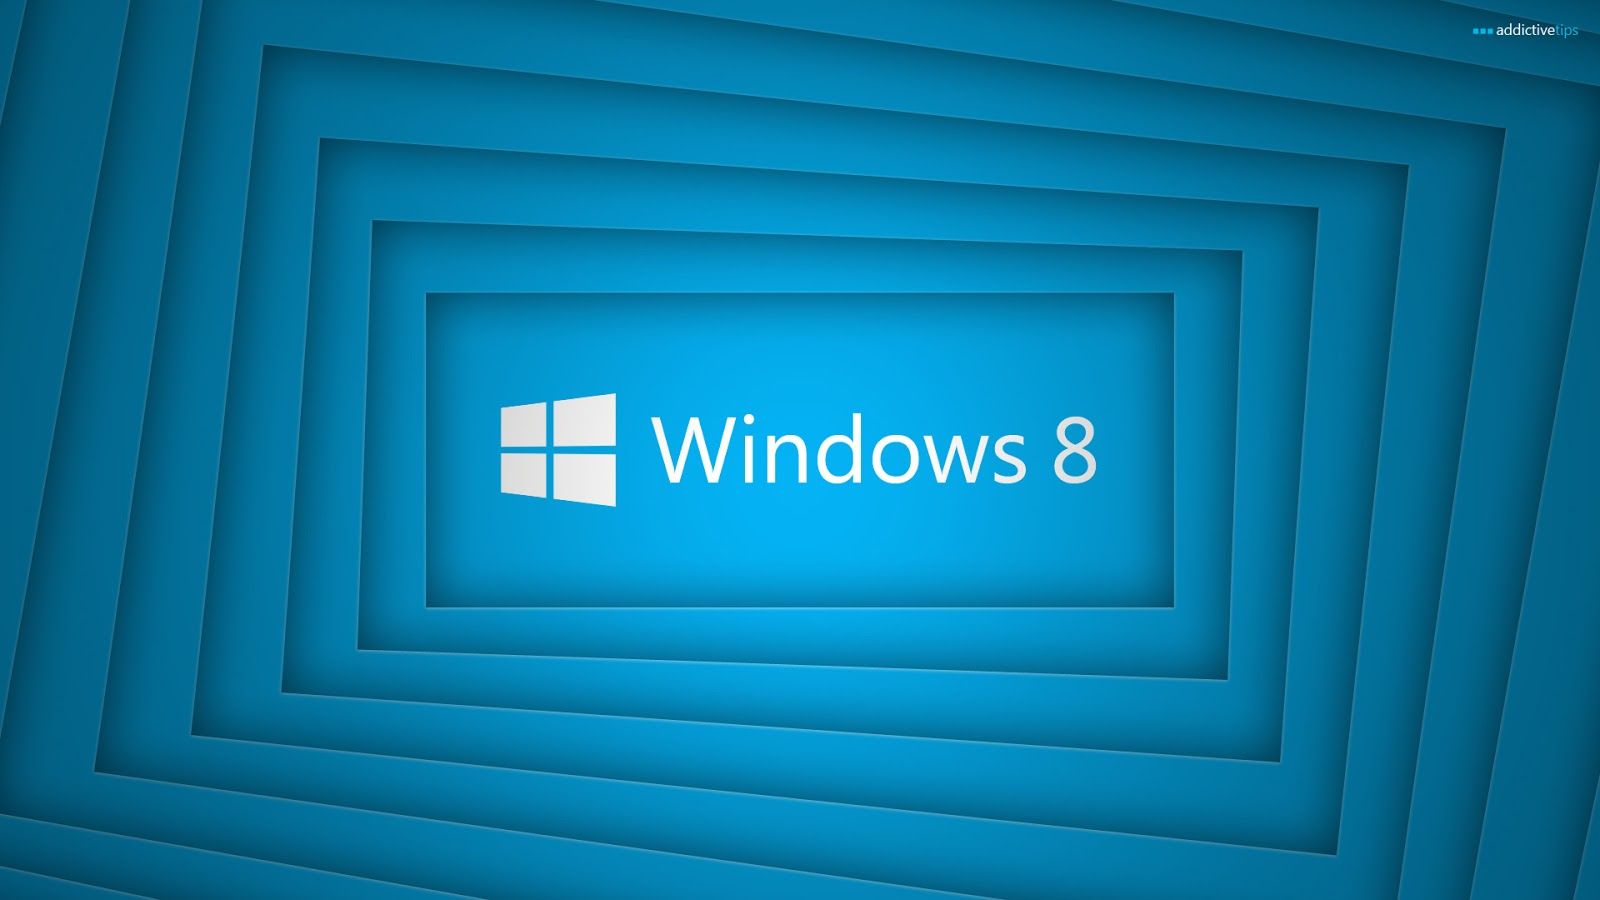 Windows 8 Wallpapers 1080p hd wallon